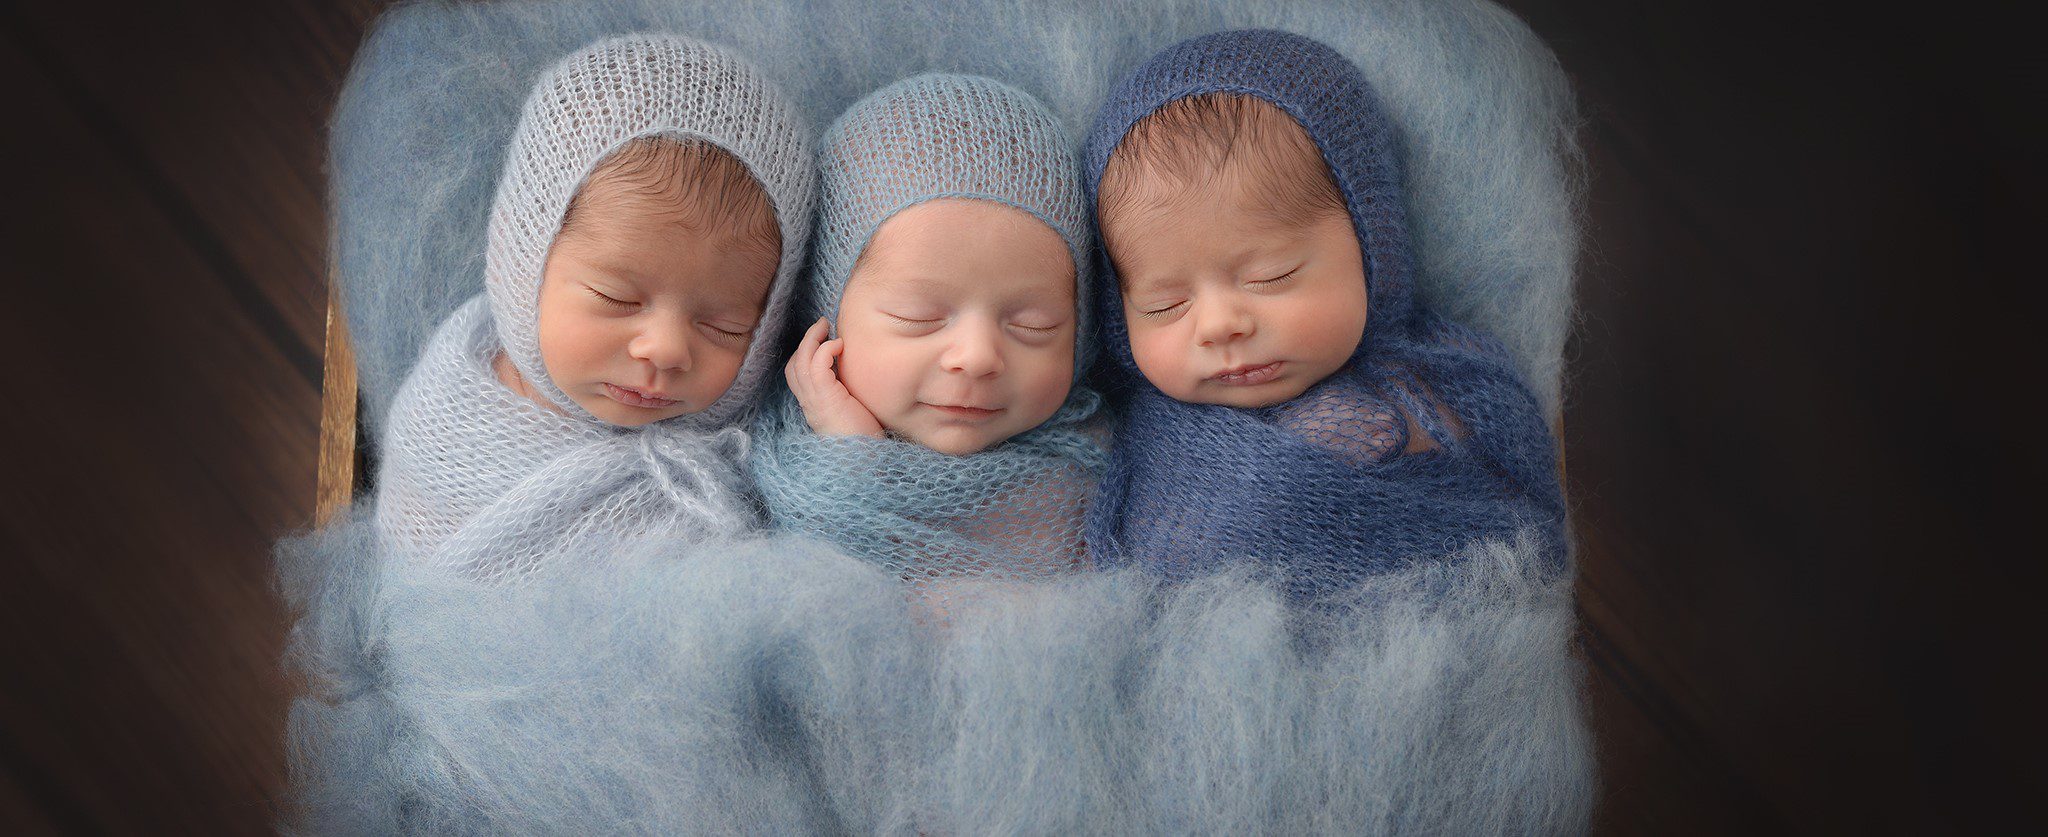 triplets boys blue snuggled smiling